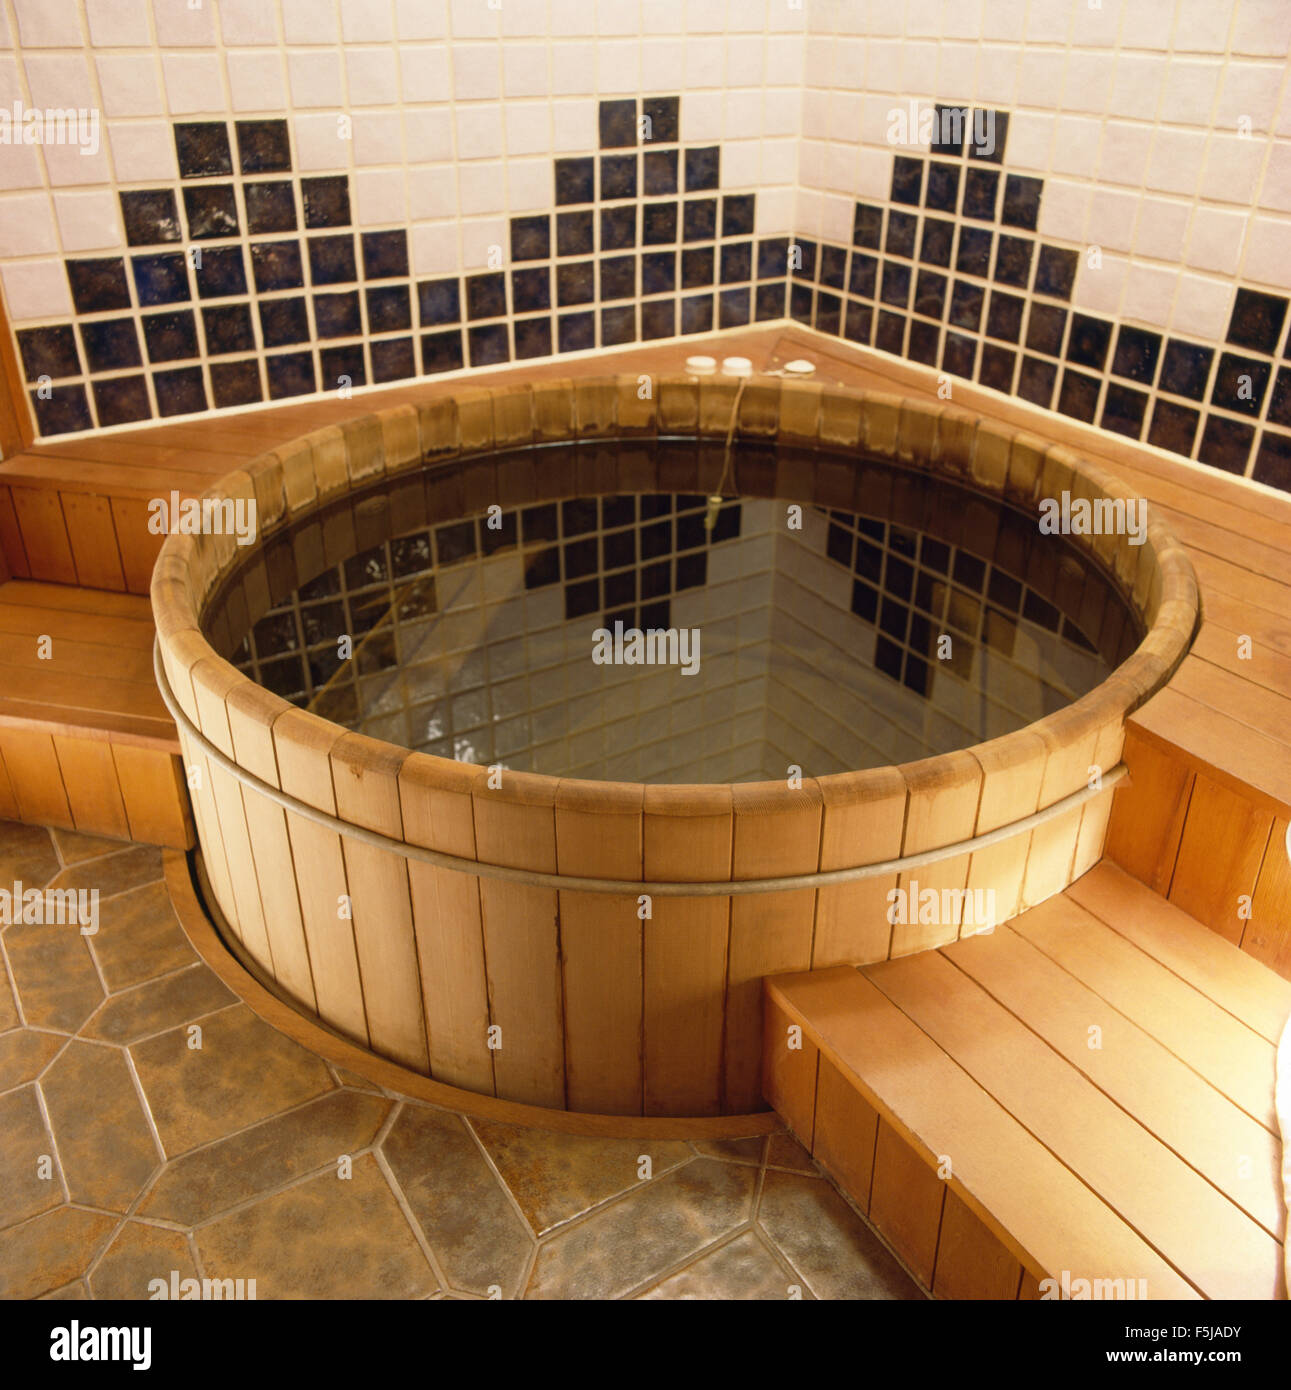 Wooden steps around Jacuzzi tub in eighties bathroom Stock Photo